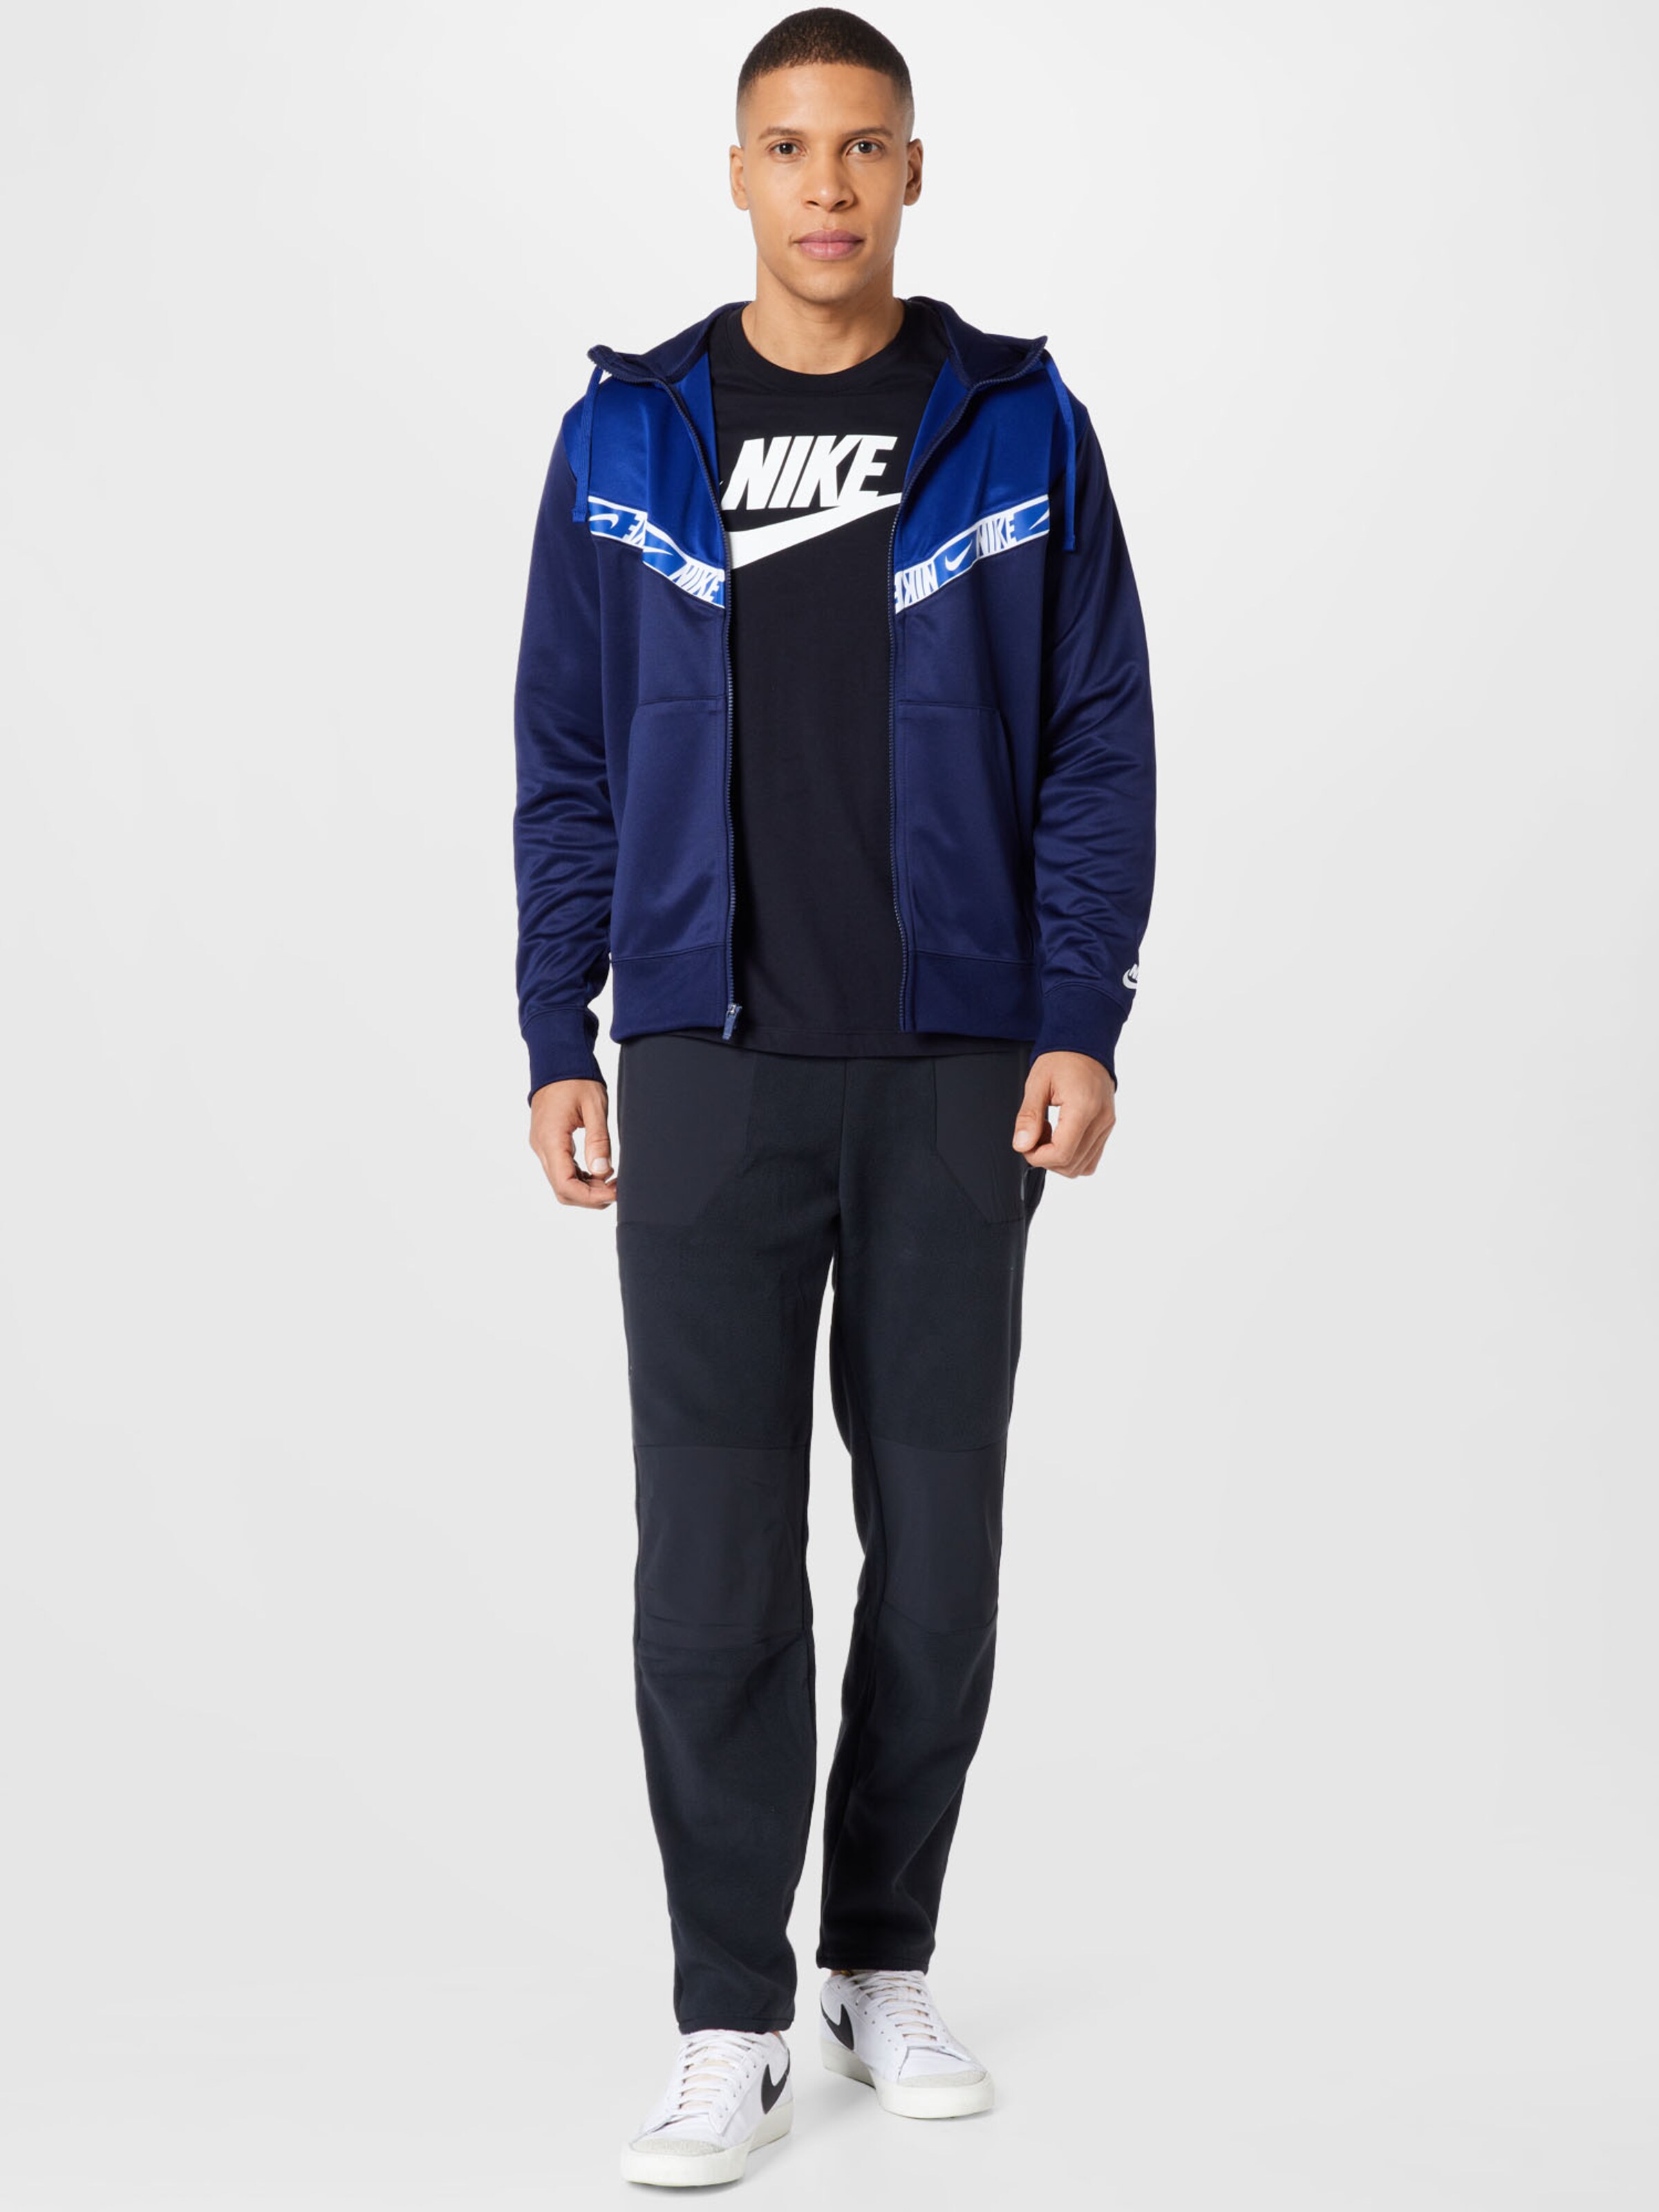 Vêtements Veste de survêtement Nike Sportswear en Bleu Marine, Bleu 